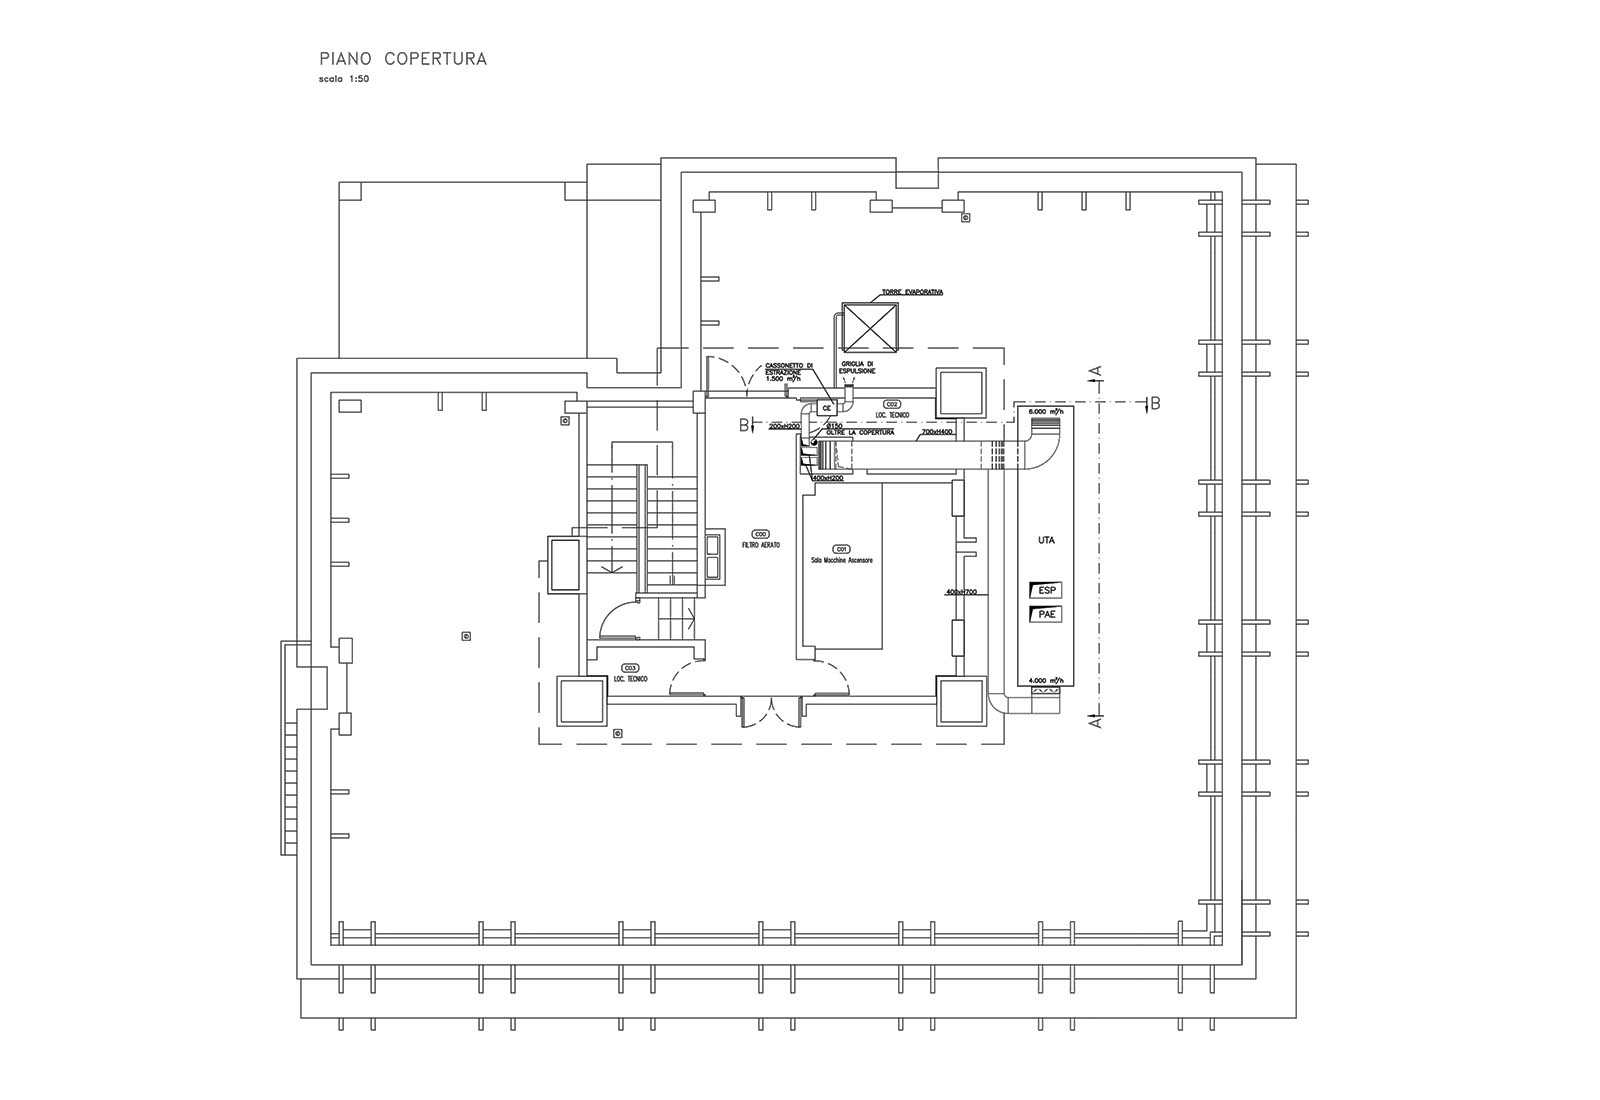 Building 24 Politecnico di Milano - Roof floor air conditioning system